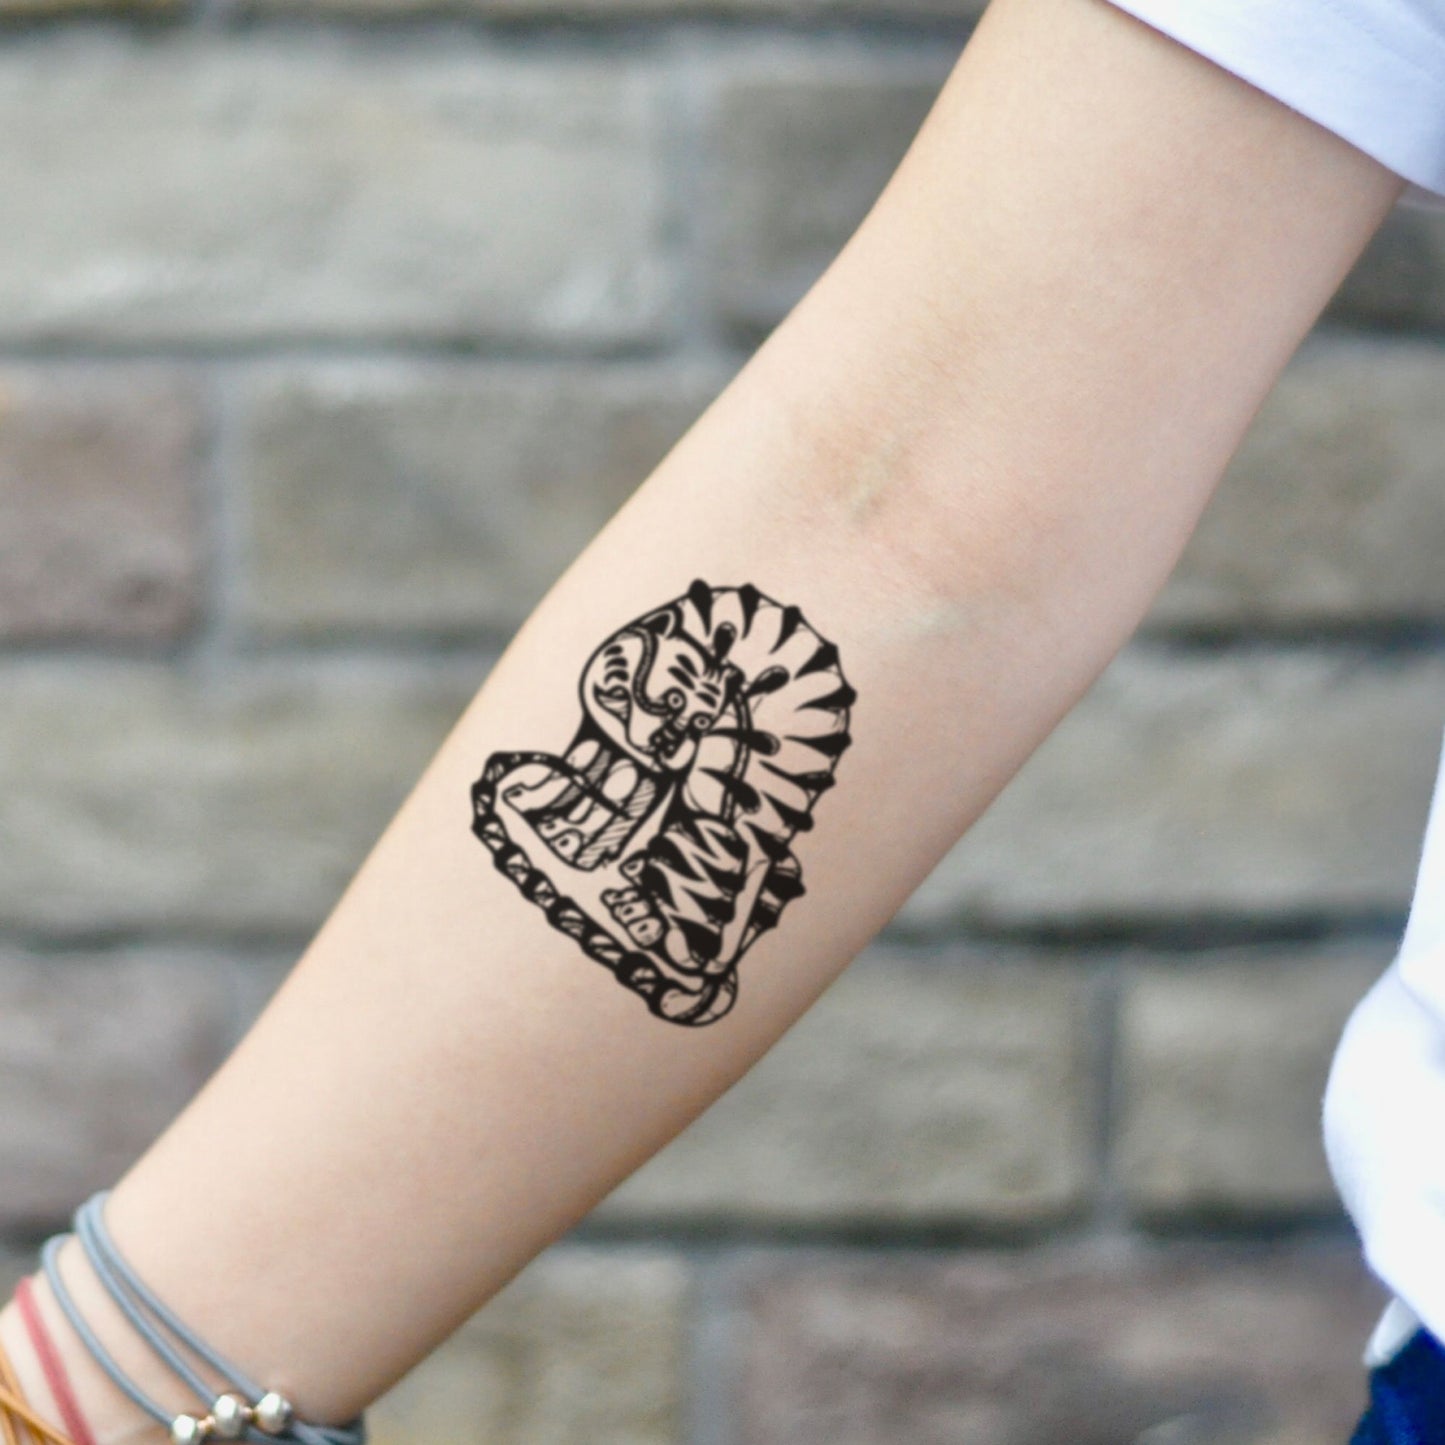 fake small korean japanese tiger pazyryk scythian animal temporary tattoo sticker design idea on inner arm